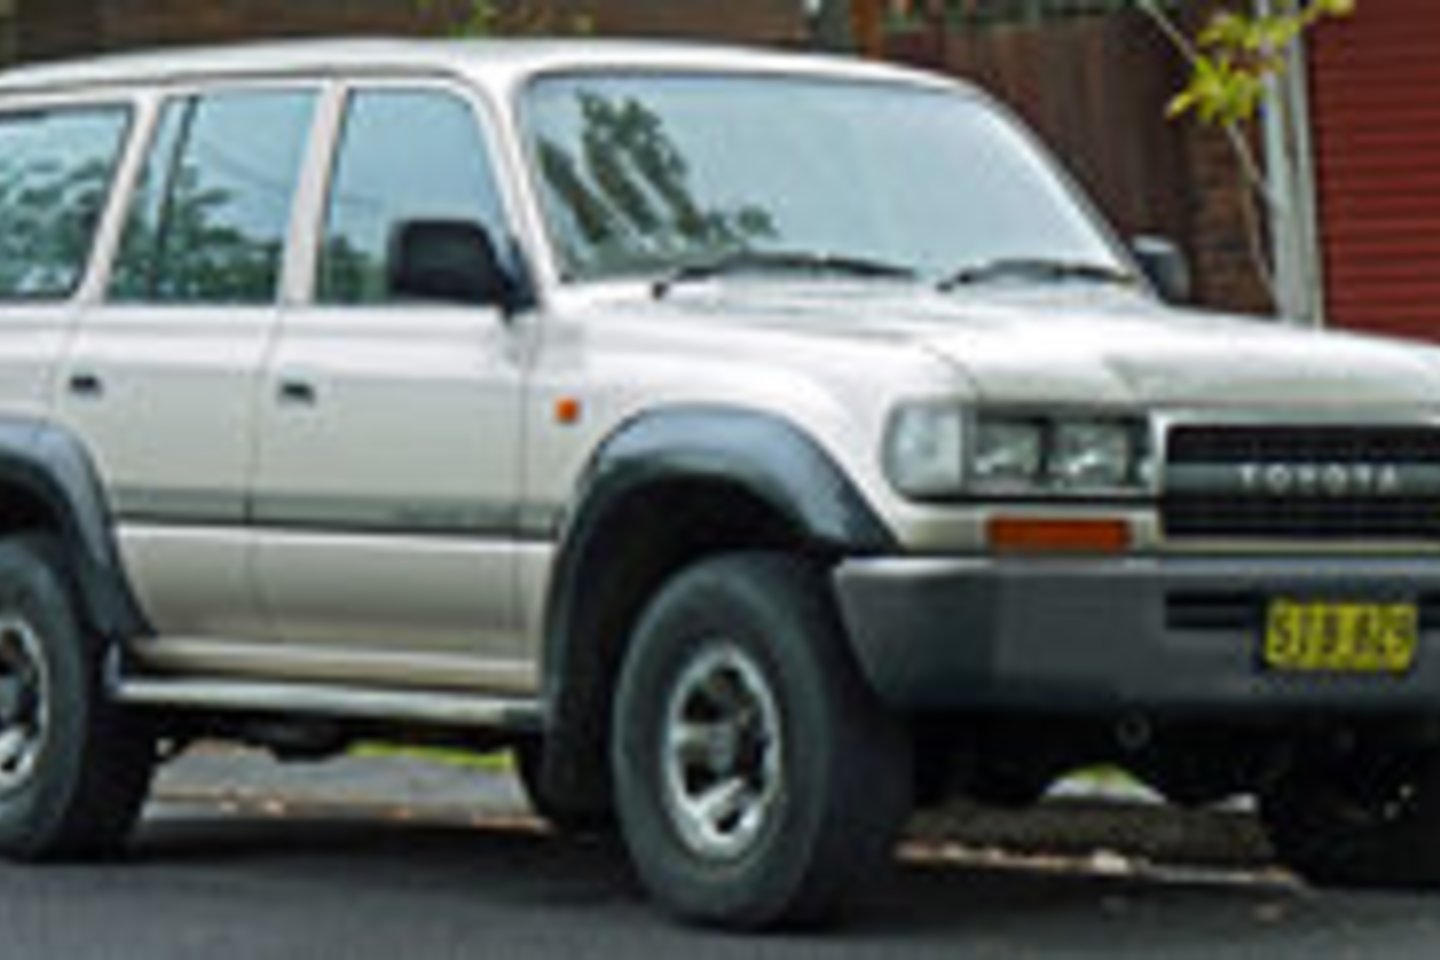 „Toyota Land Cruiser“<br>www.wikipedia.org